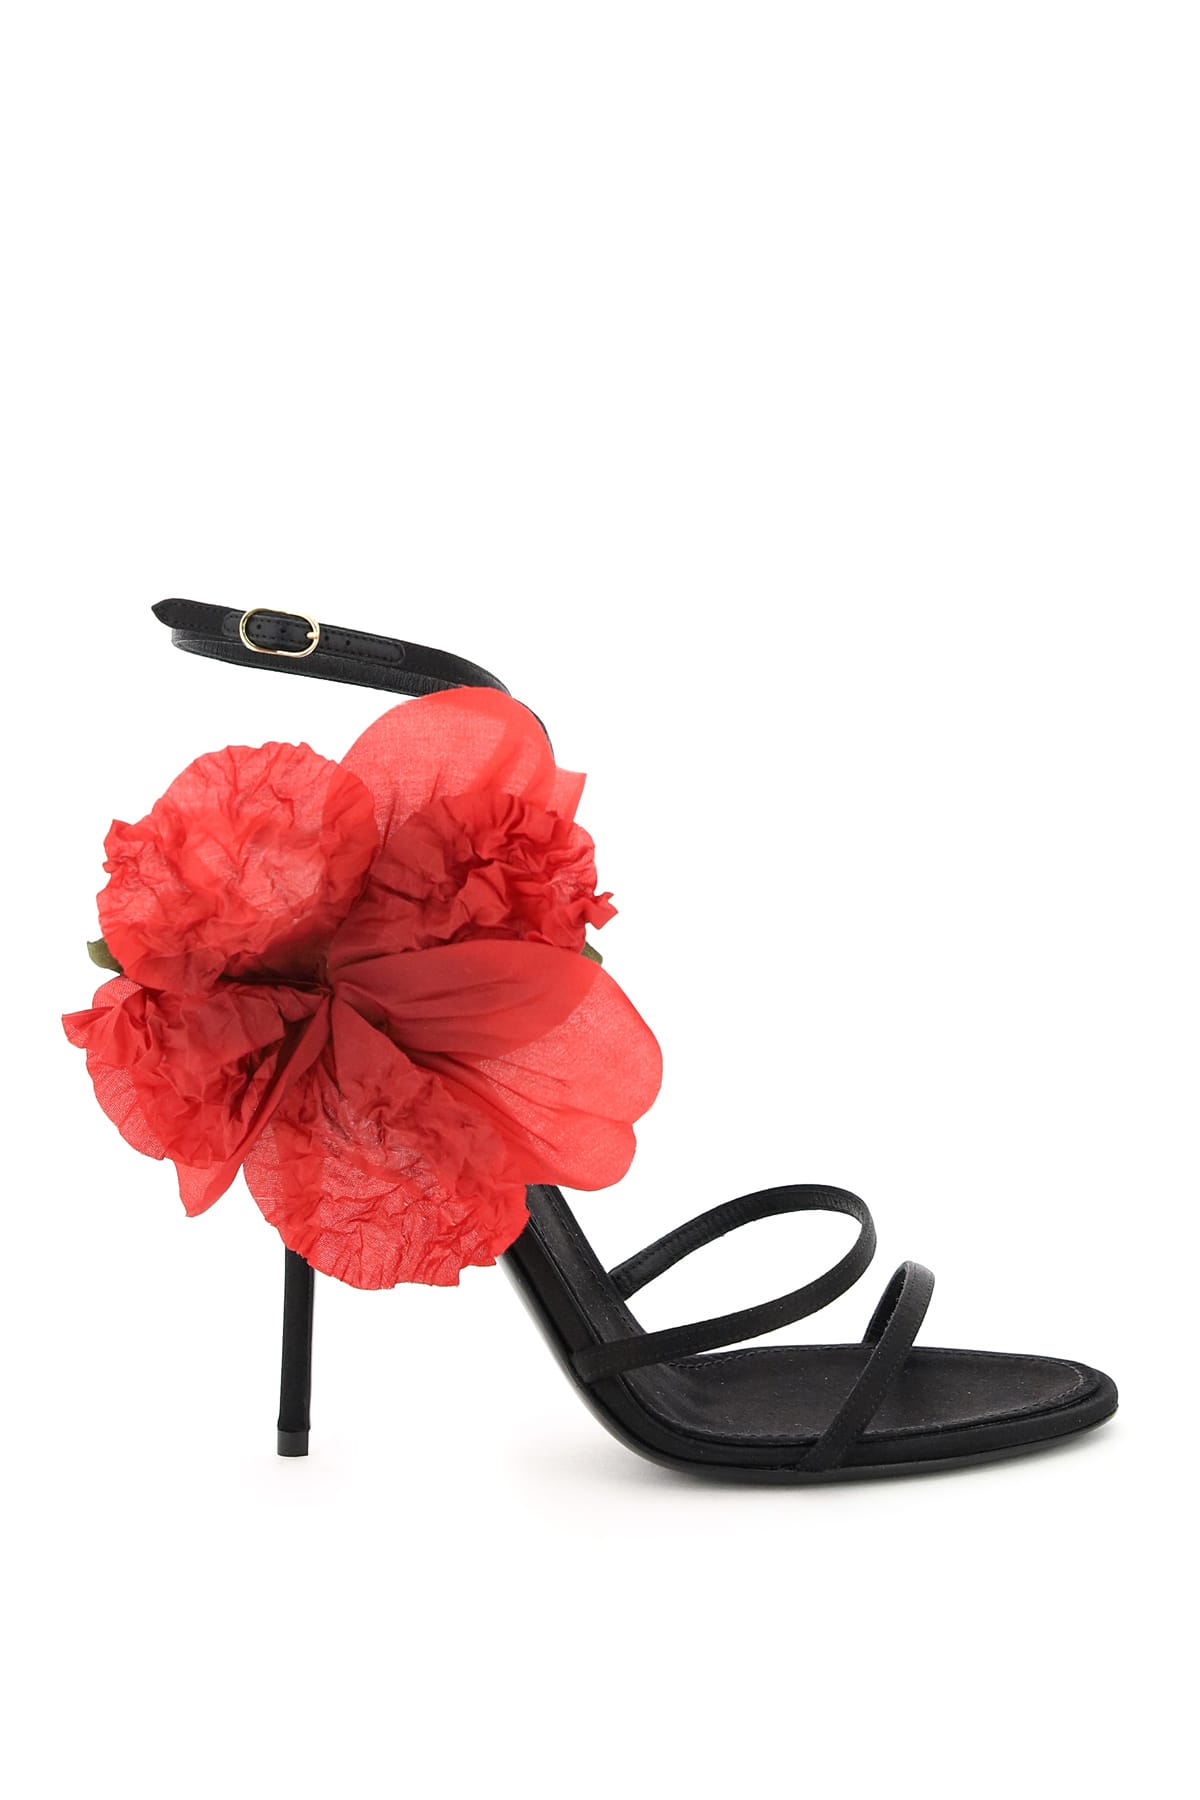 Dolce & Gabbana Keira Sandals With Poppy